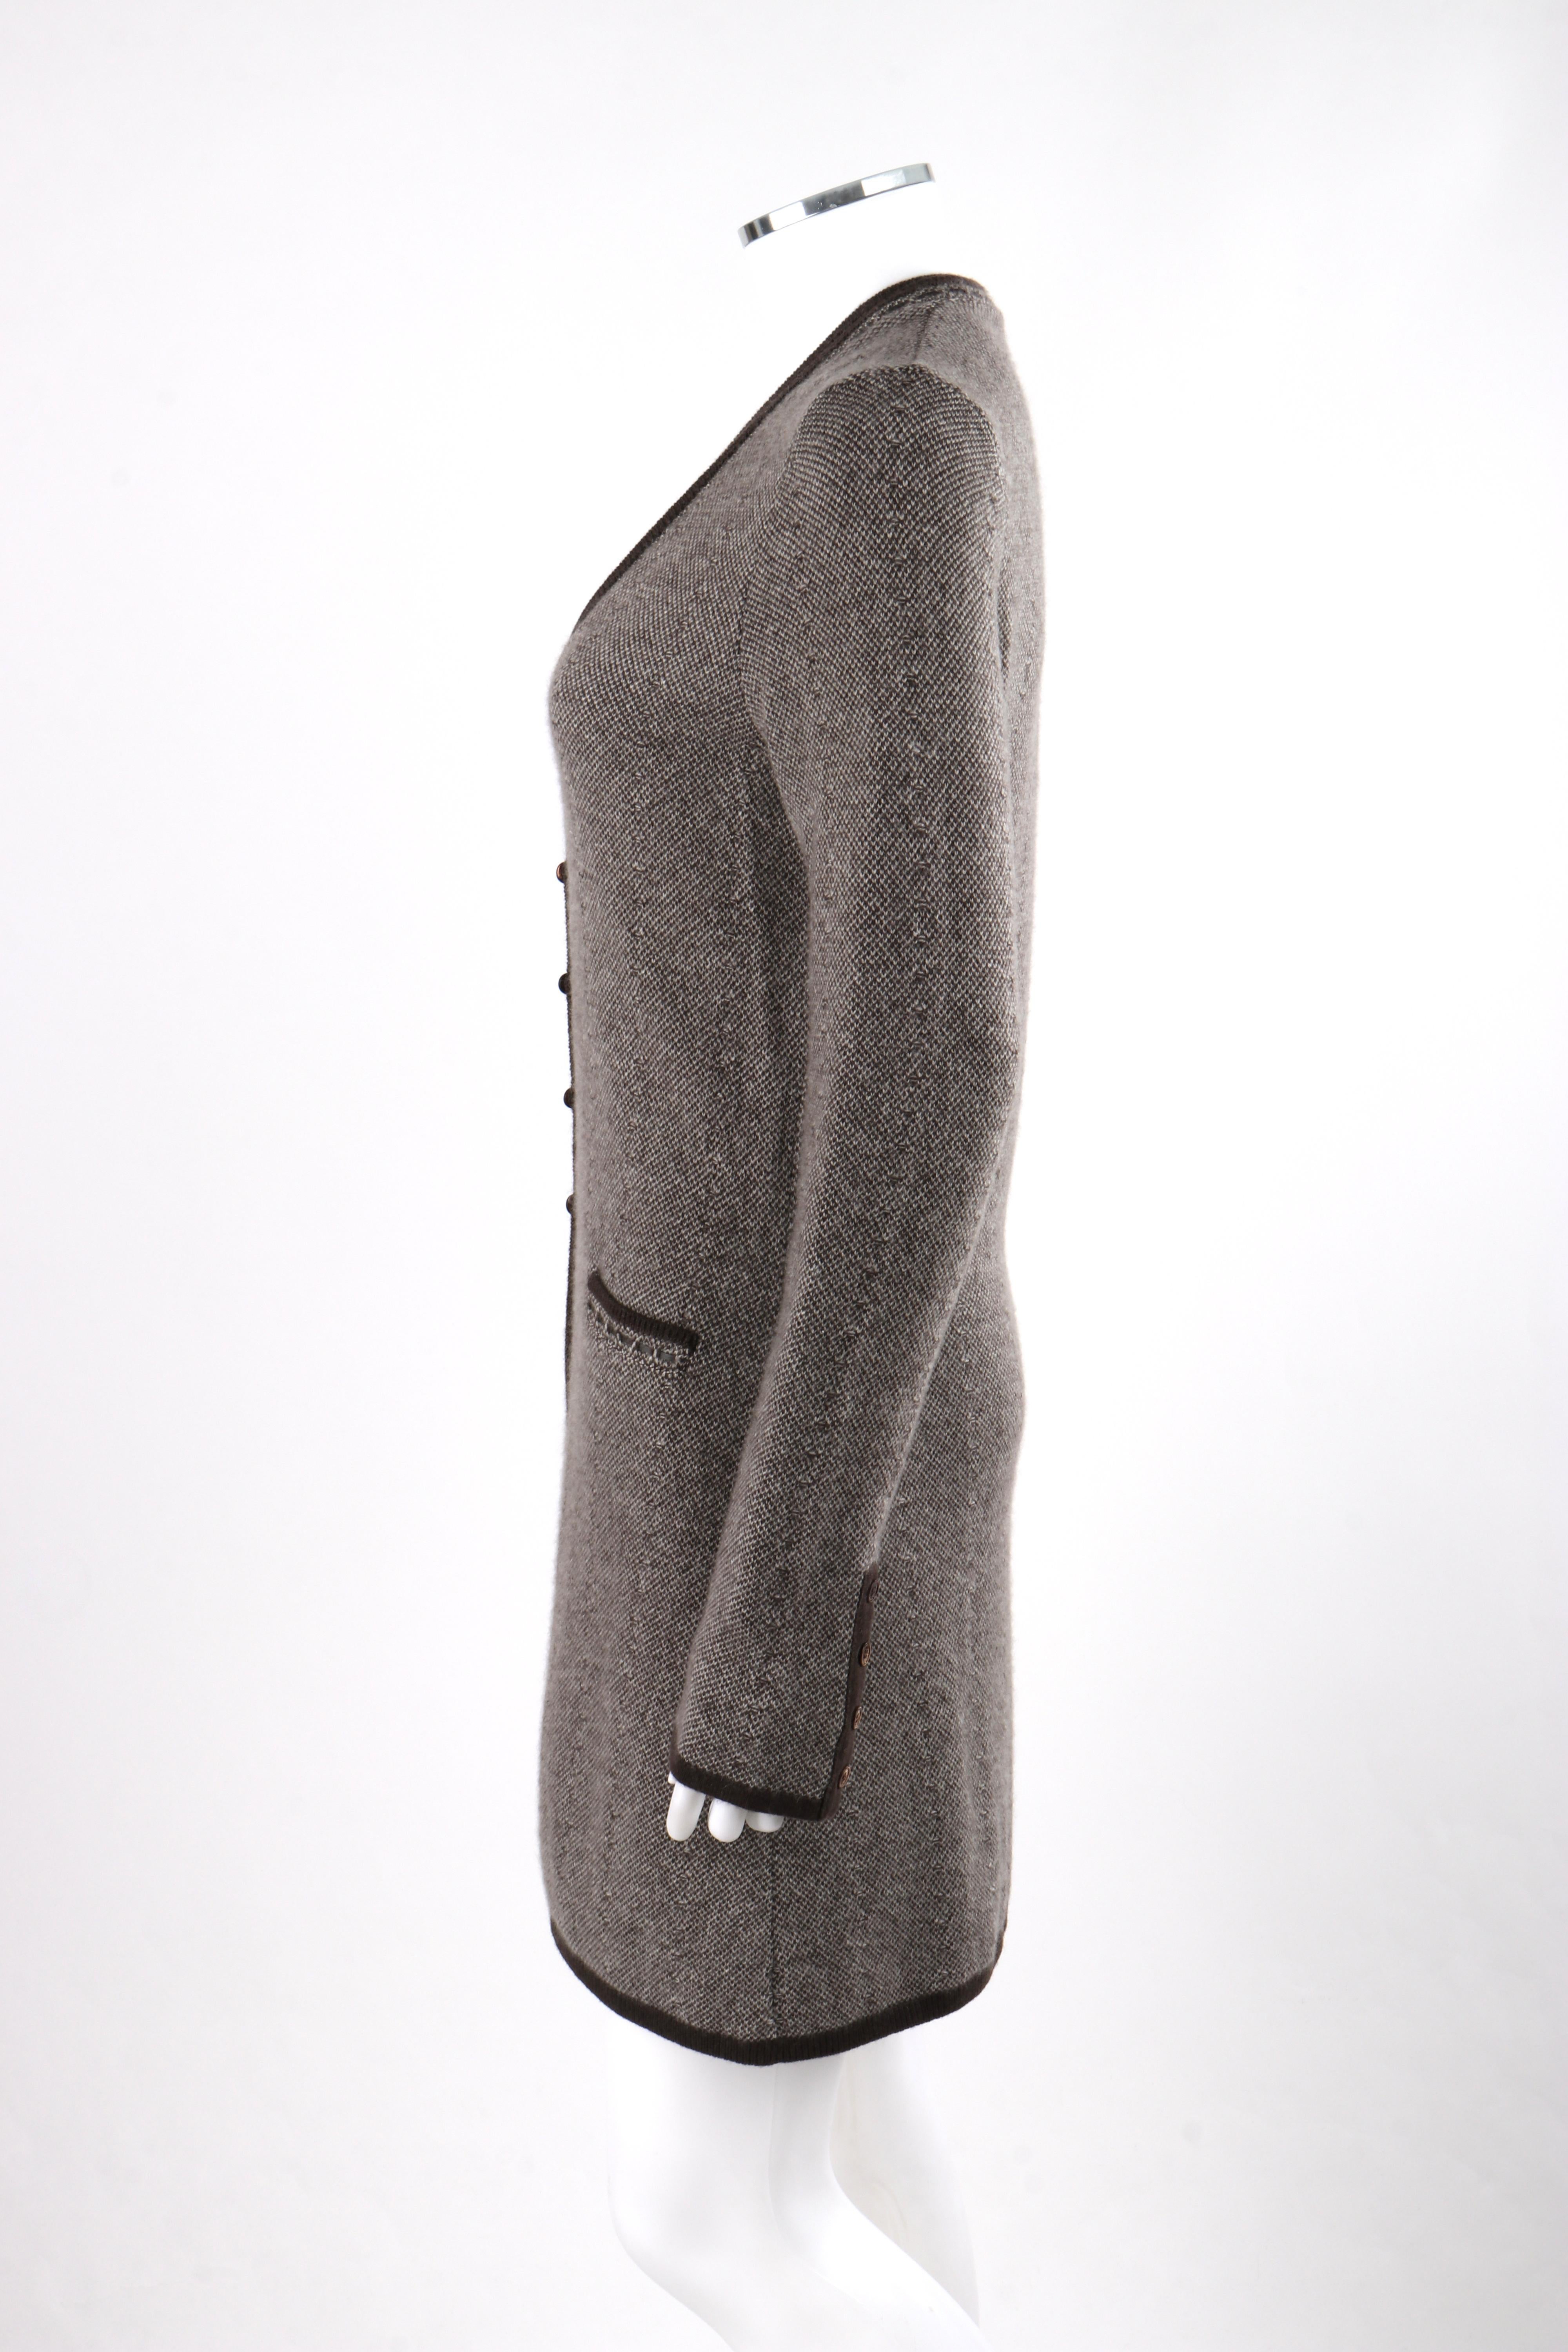 LORO PIANA Brown Cashmere Leather Tweed Knit Cardigan Dress Sweater Twin Set 44 1